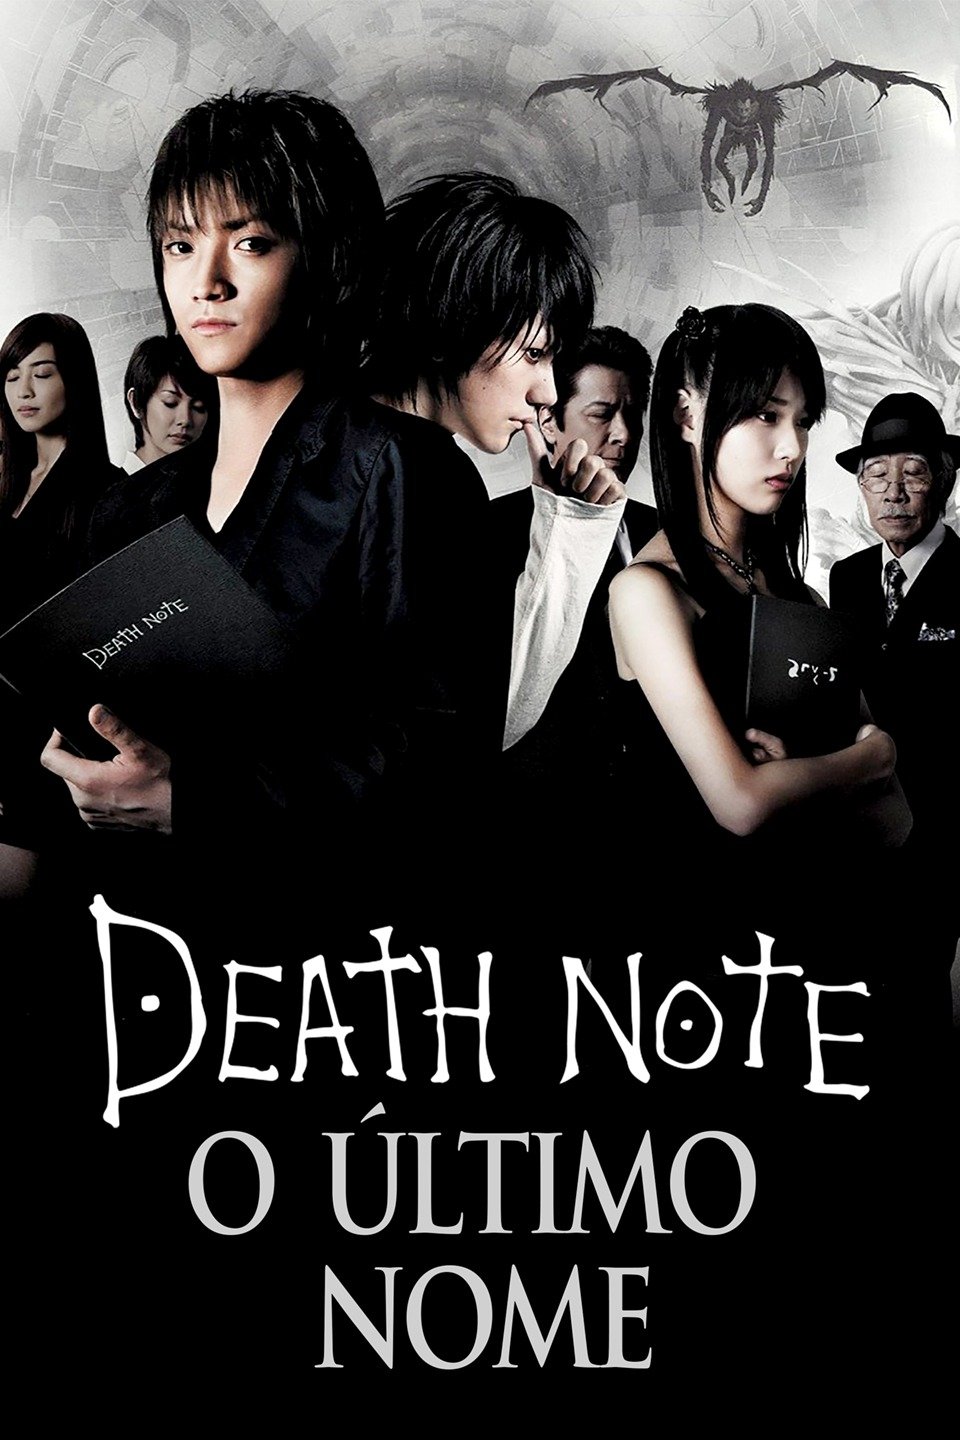 assistir filmes online gratis death note 2006 dublado